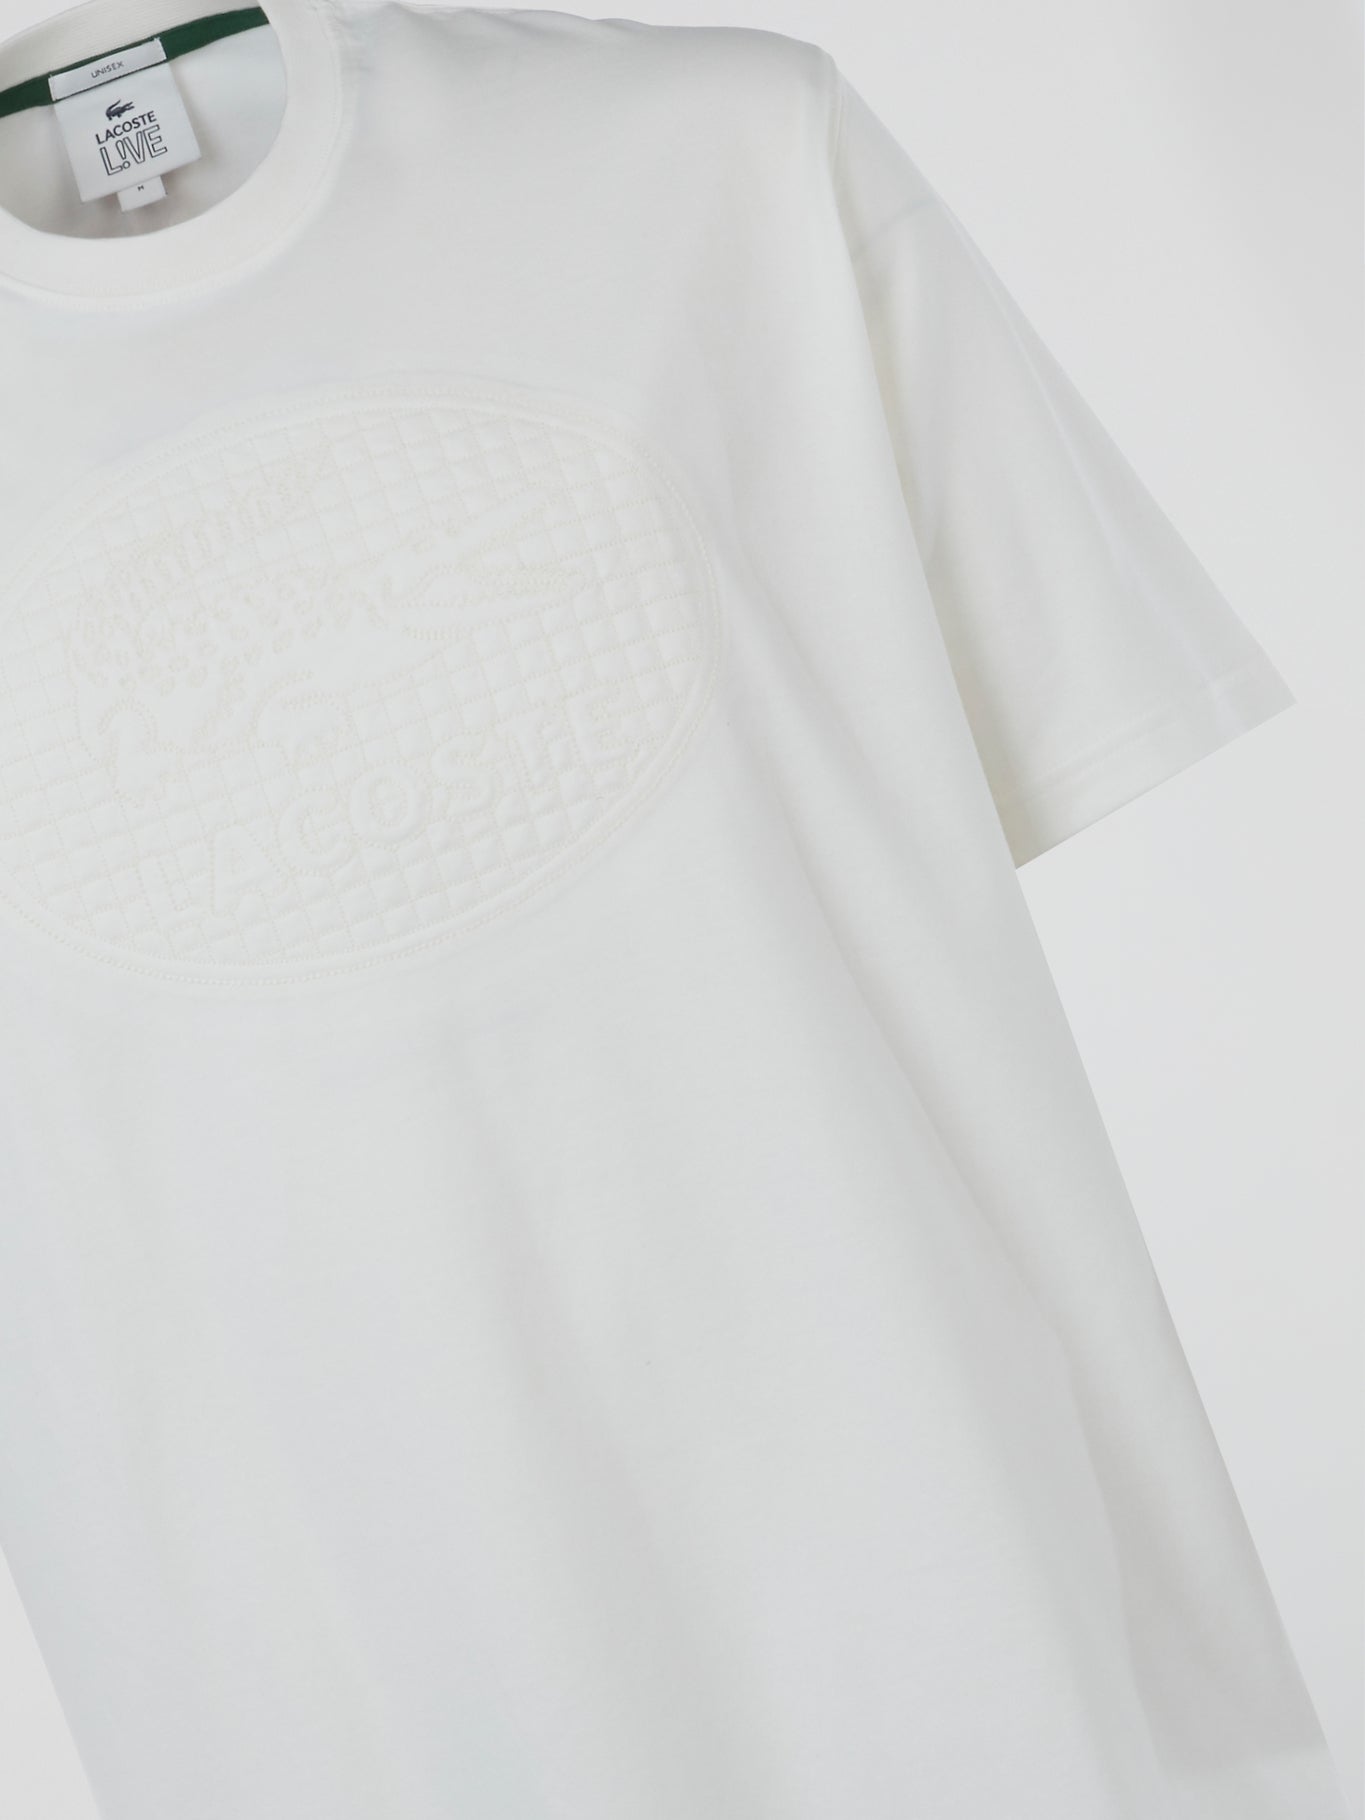 White Logo Cotton T-Shirt